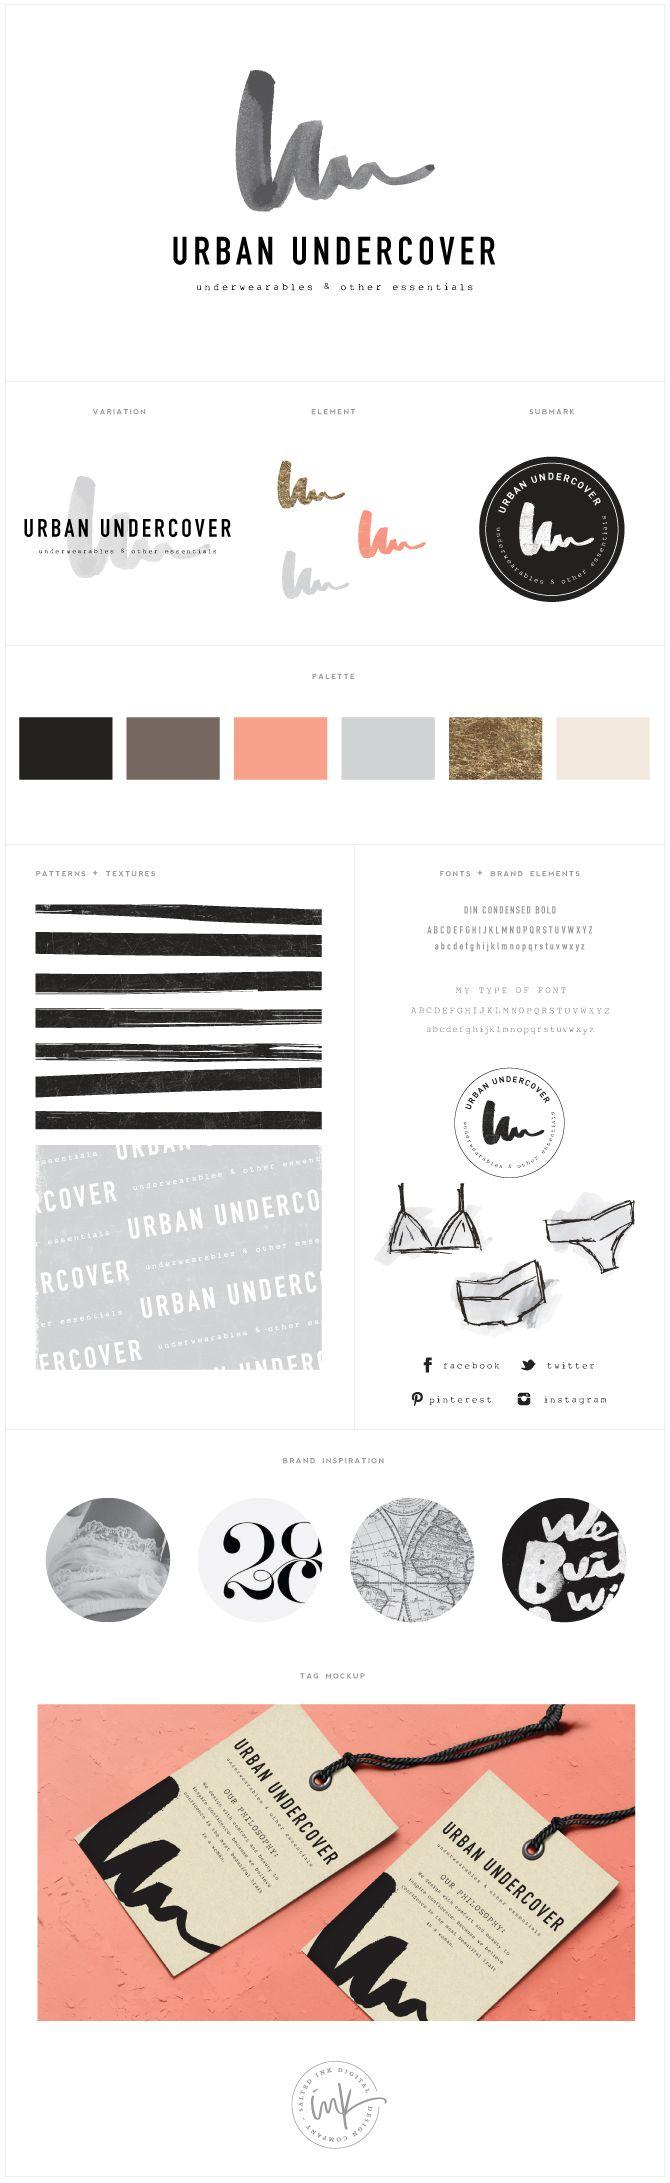 Undercover Brand Logo - Brand Launch: Urban Undercover Ink Design Co